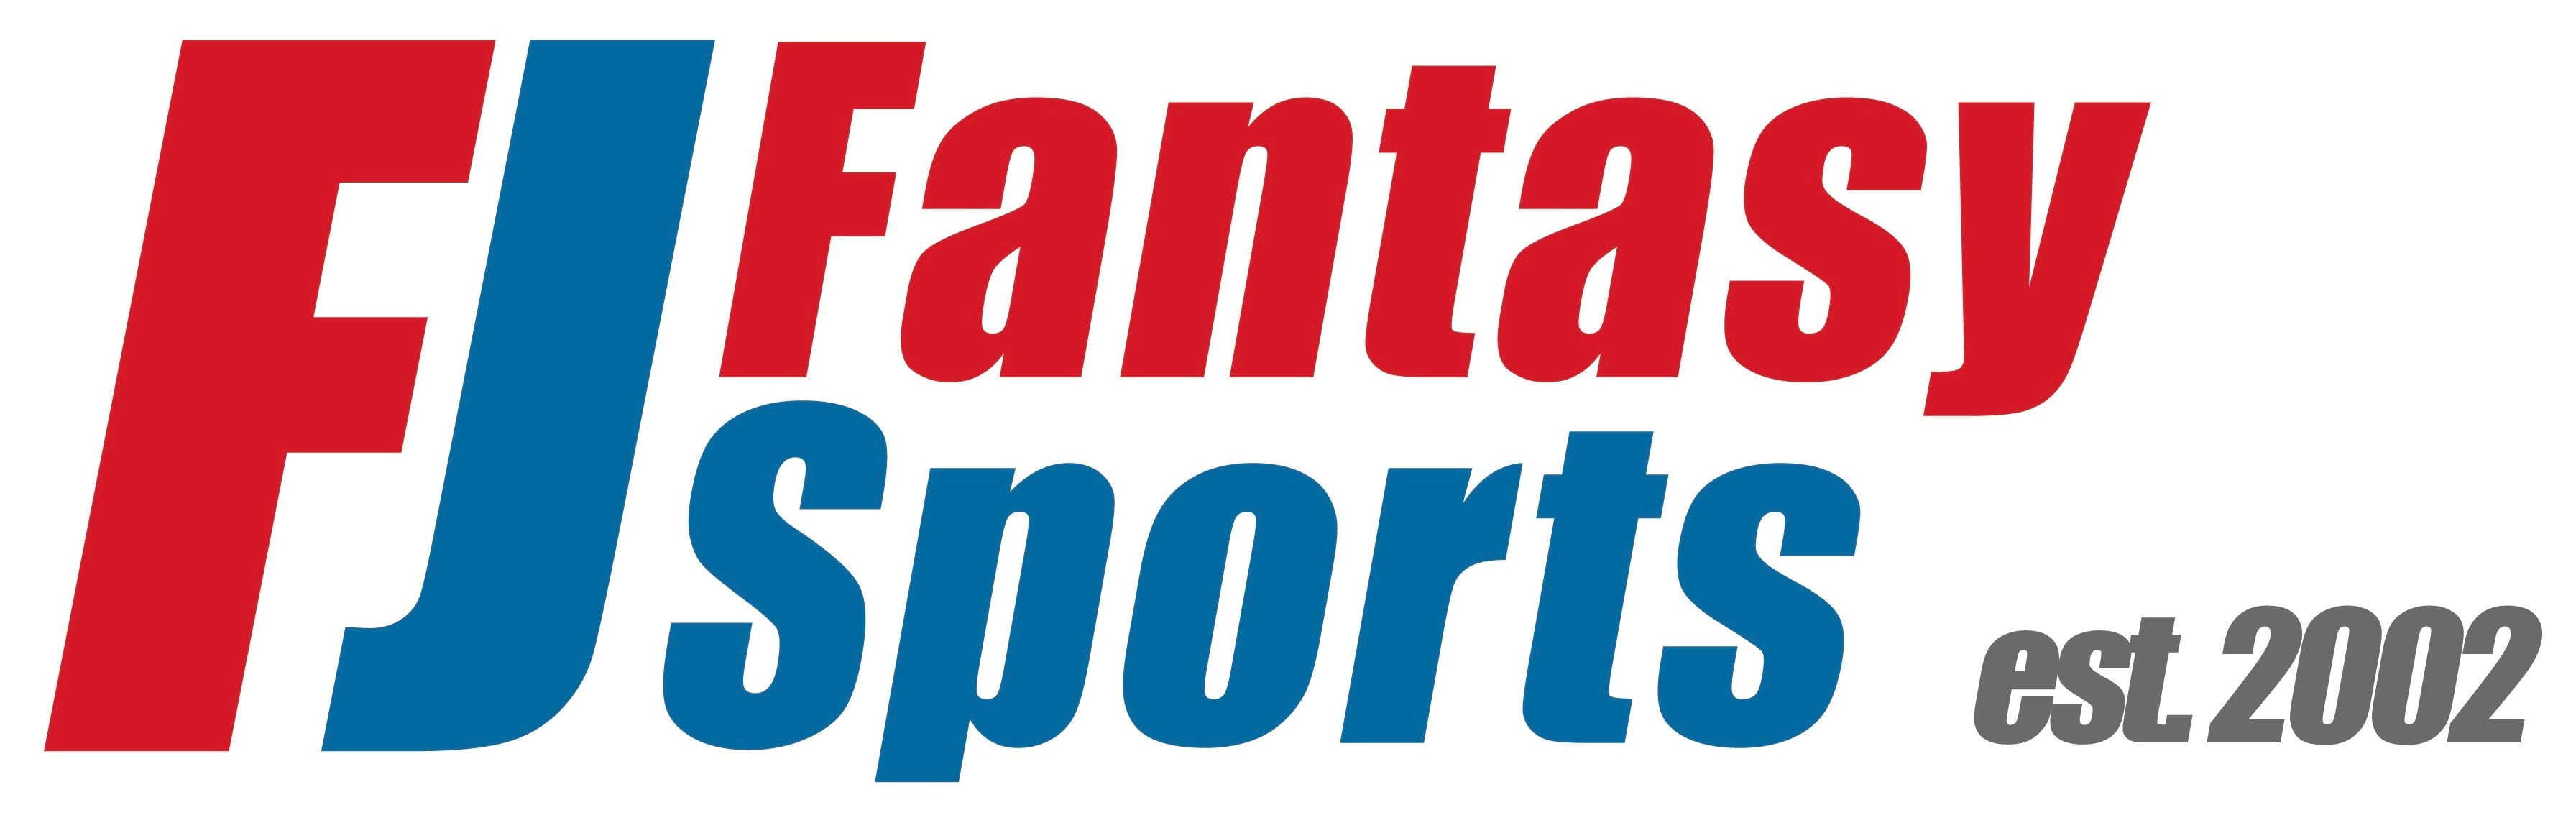 : Fantasy Football Draft Board Kit 2023-24 Season XL 4 x